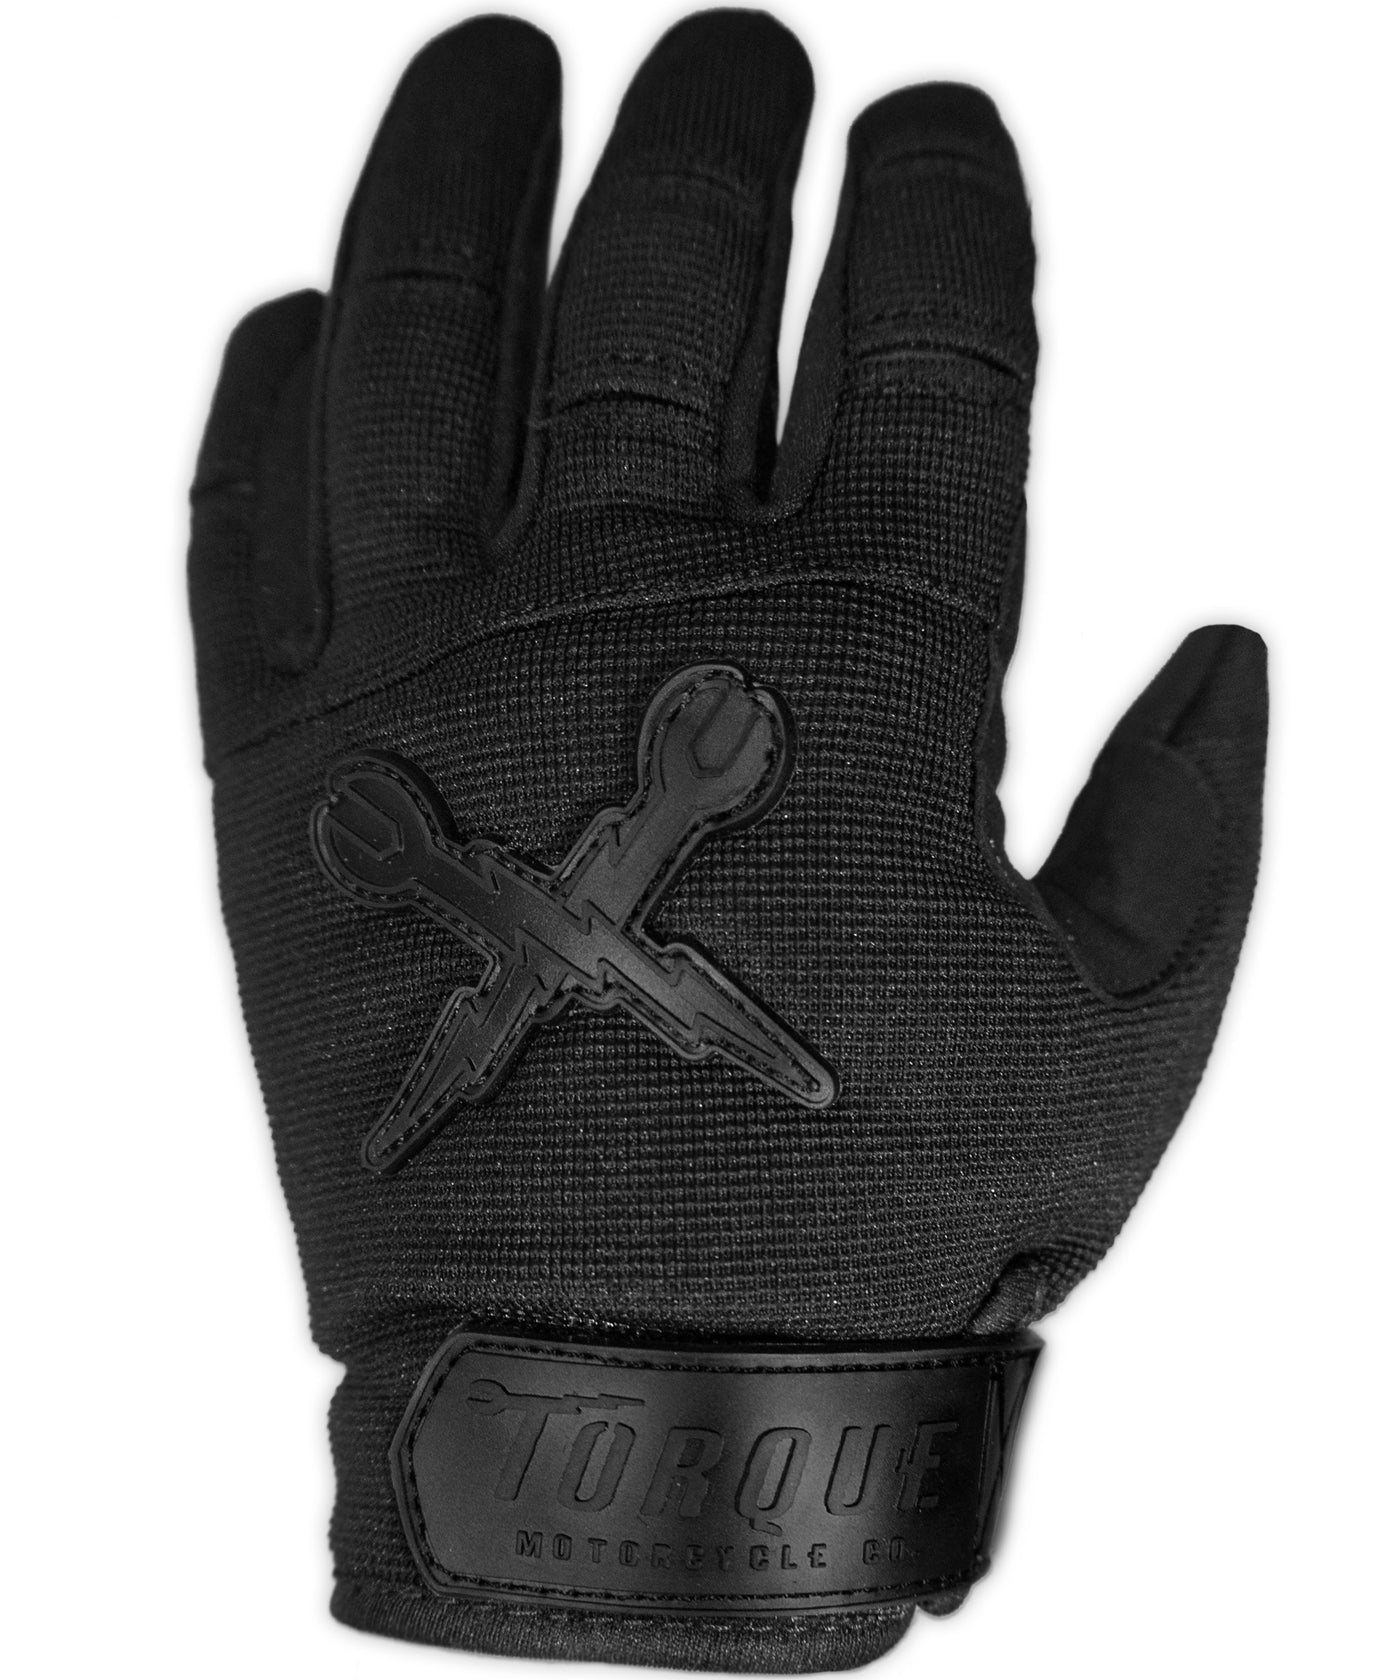 Back side of moto gloves with Torque logo